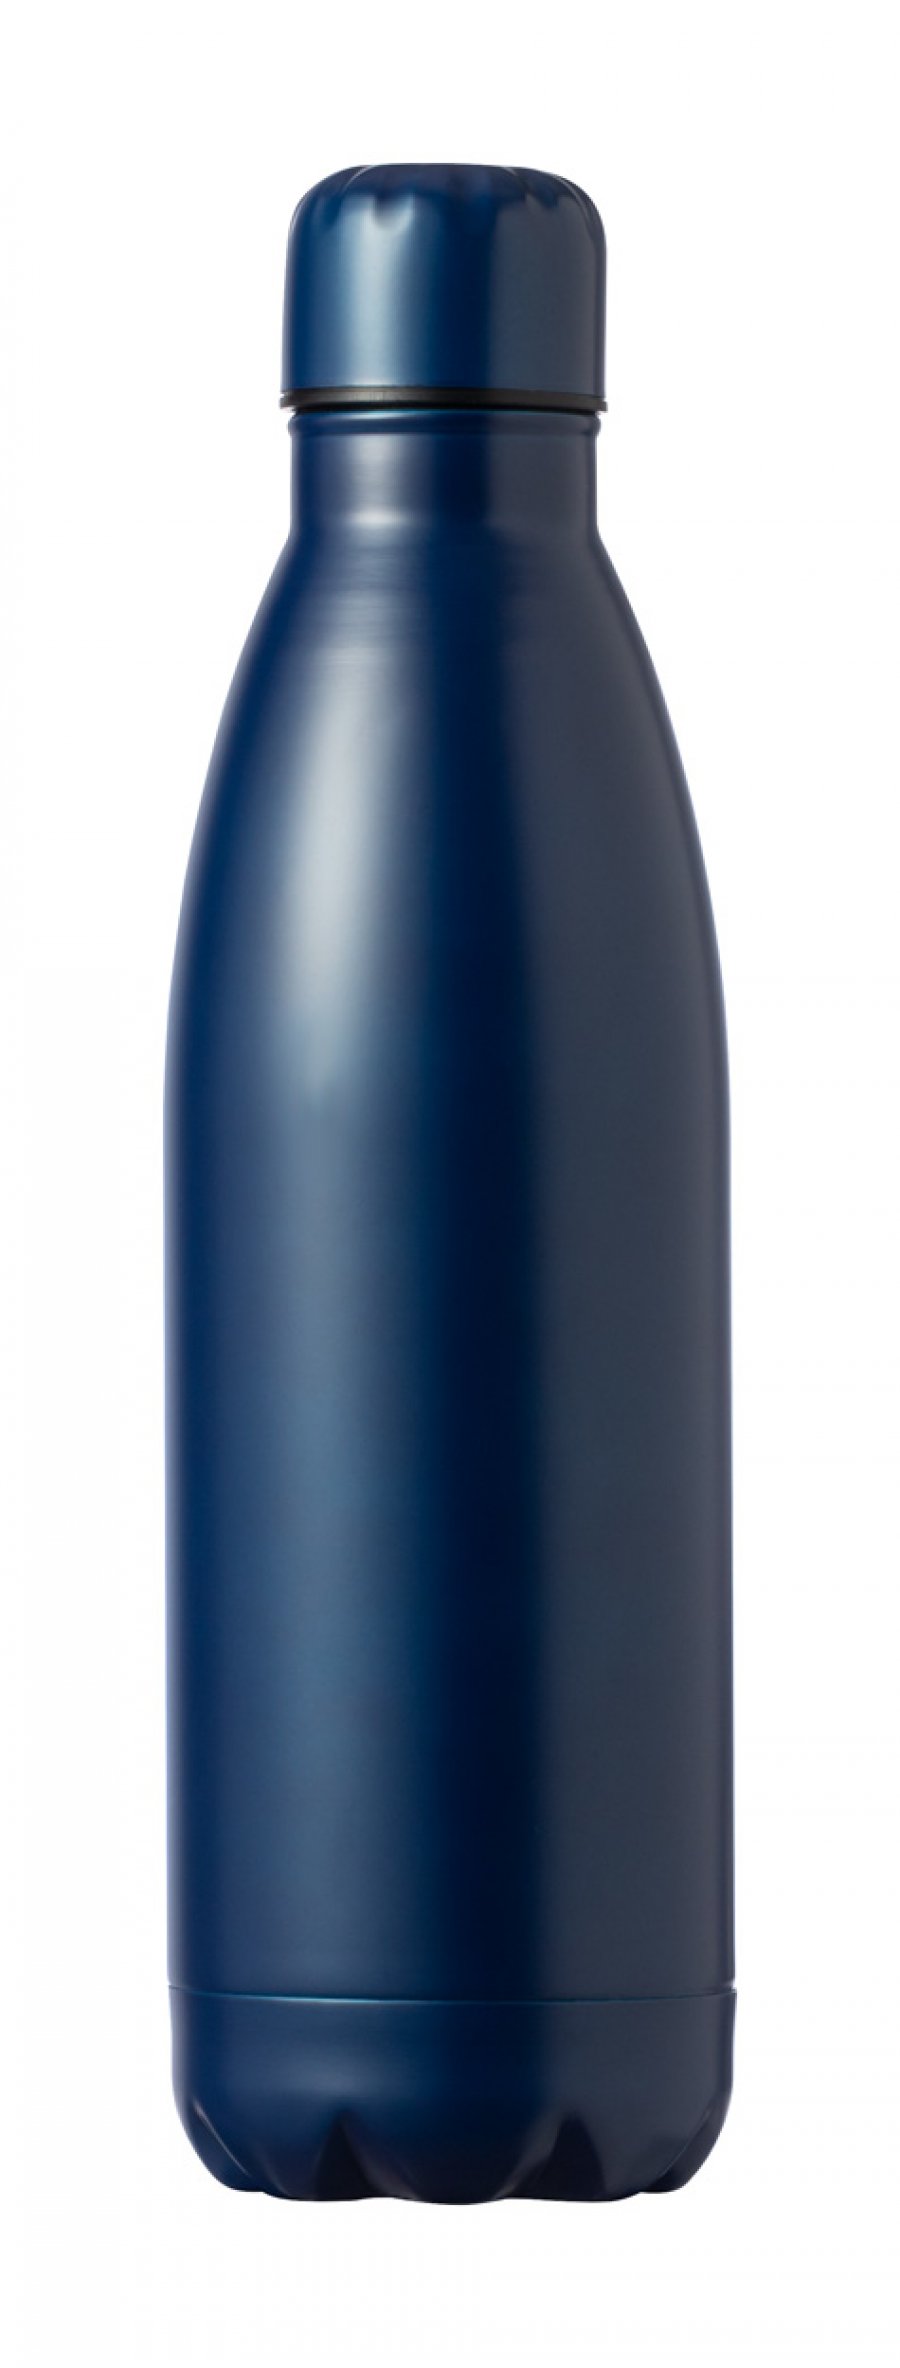 "Rextan" láhev z nerez oceli, tmavě modrá